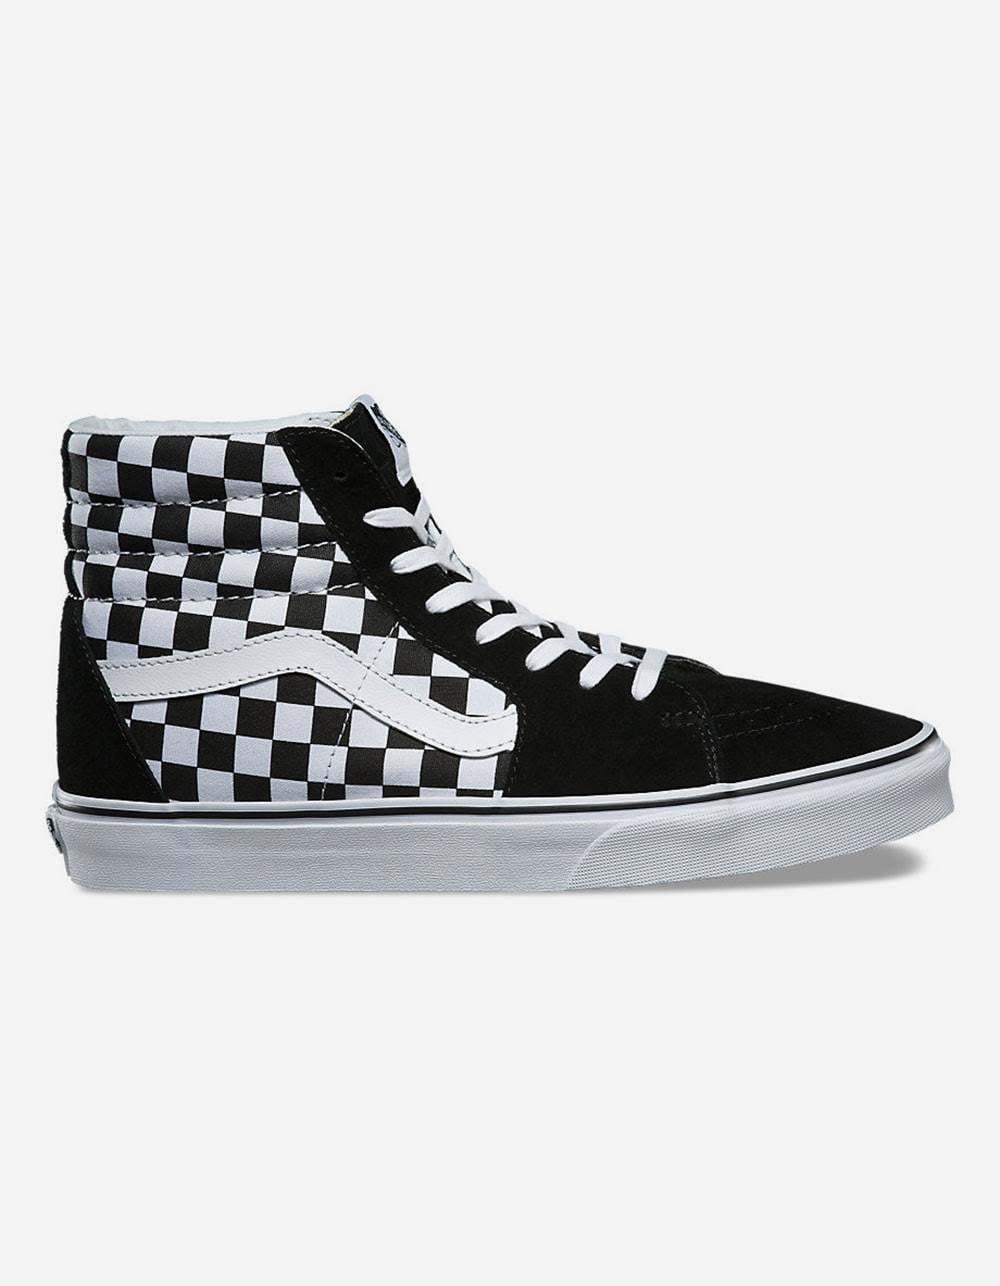 Vans SK8 Hi Checkerboard Black/True White Women's Skate Shoes Size 6.5 ...